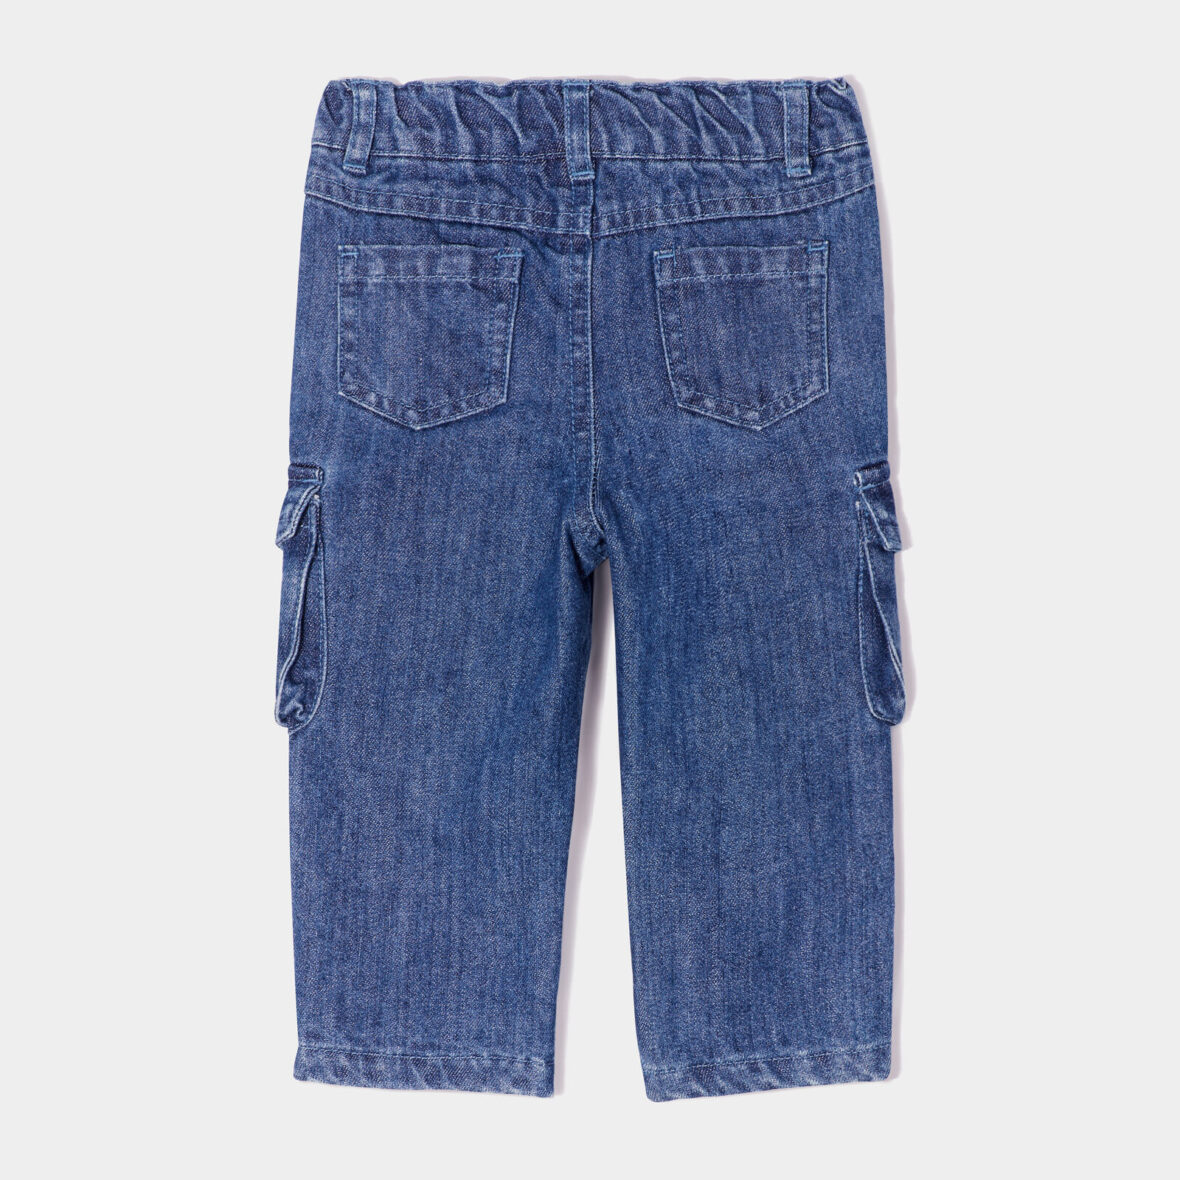 jeans-cargo-poches-laterales-creeks-bleu-bebeg-vue2-36165600814463250